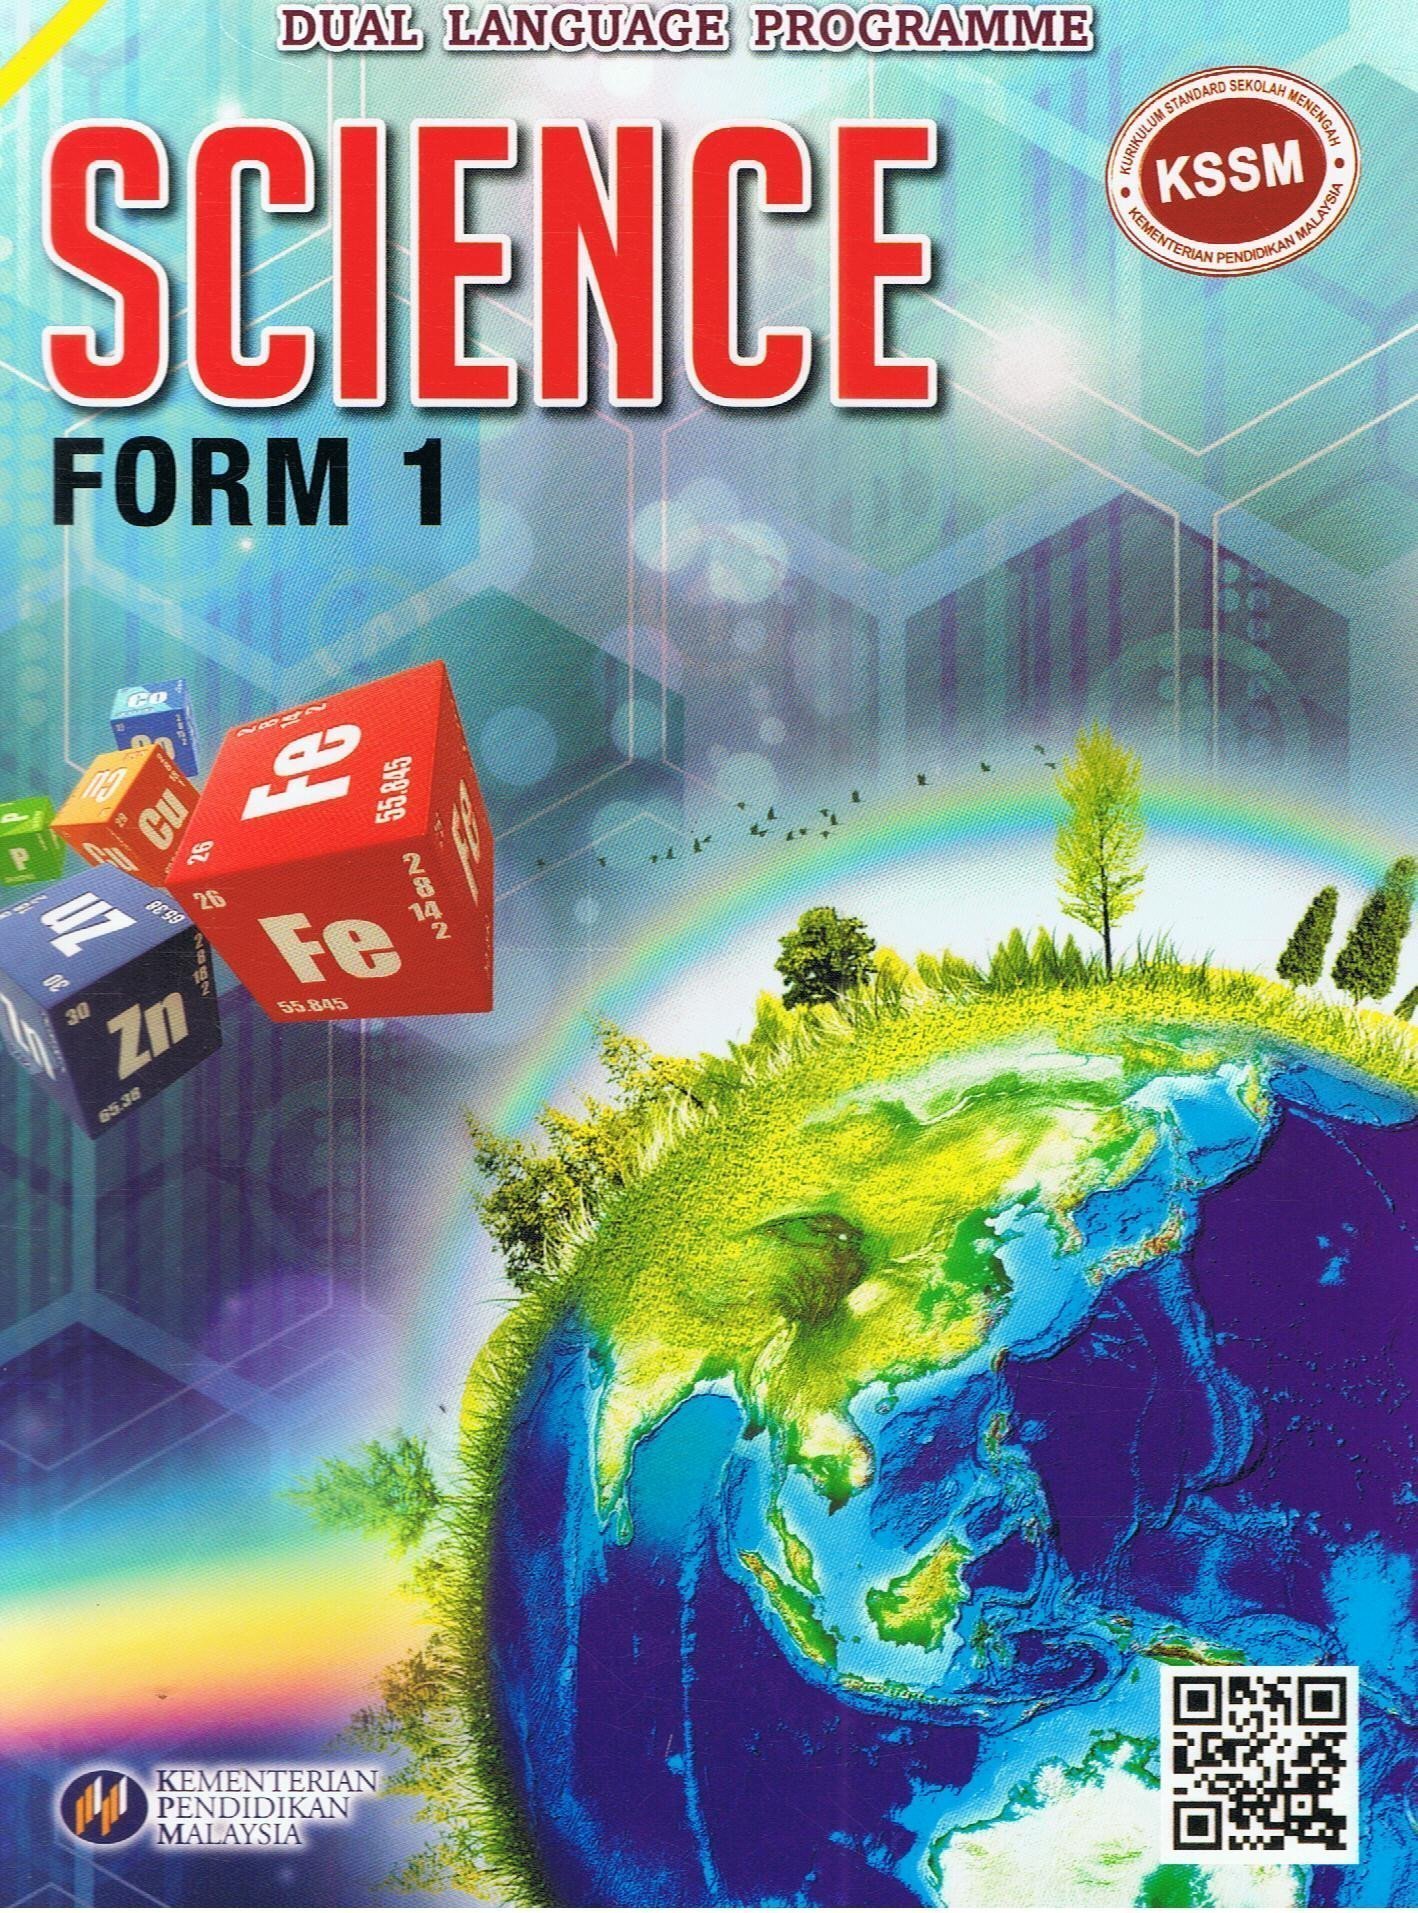 Karangkraf Buku Teks Science Form 1 Dlp Textbook Shopee Singapore